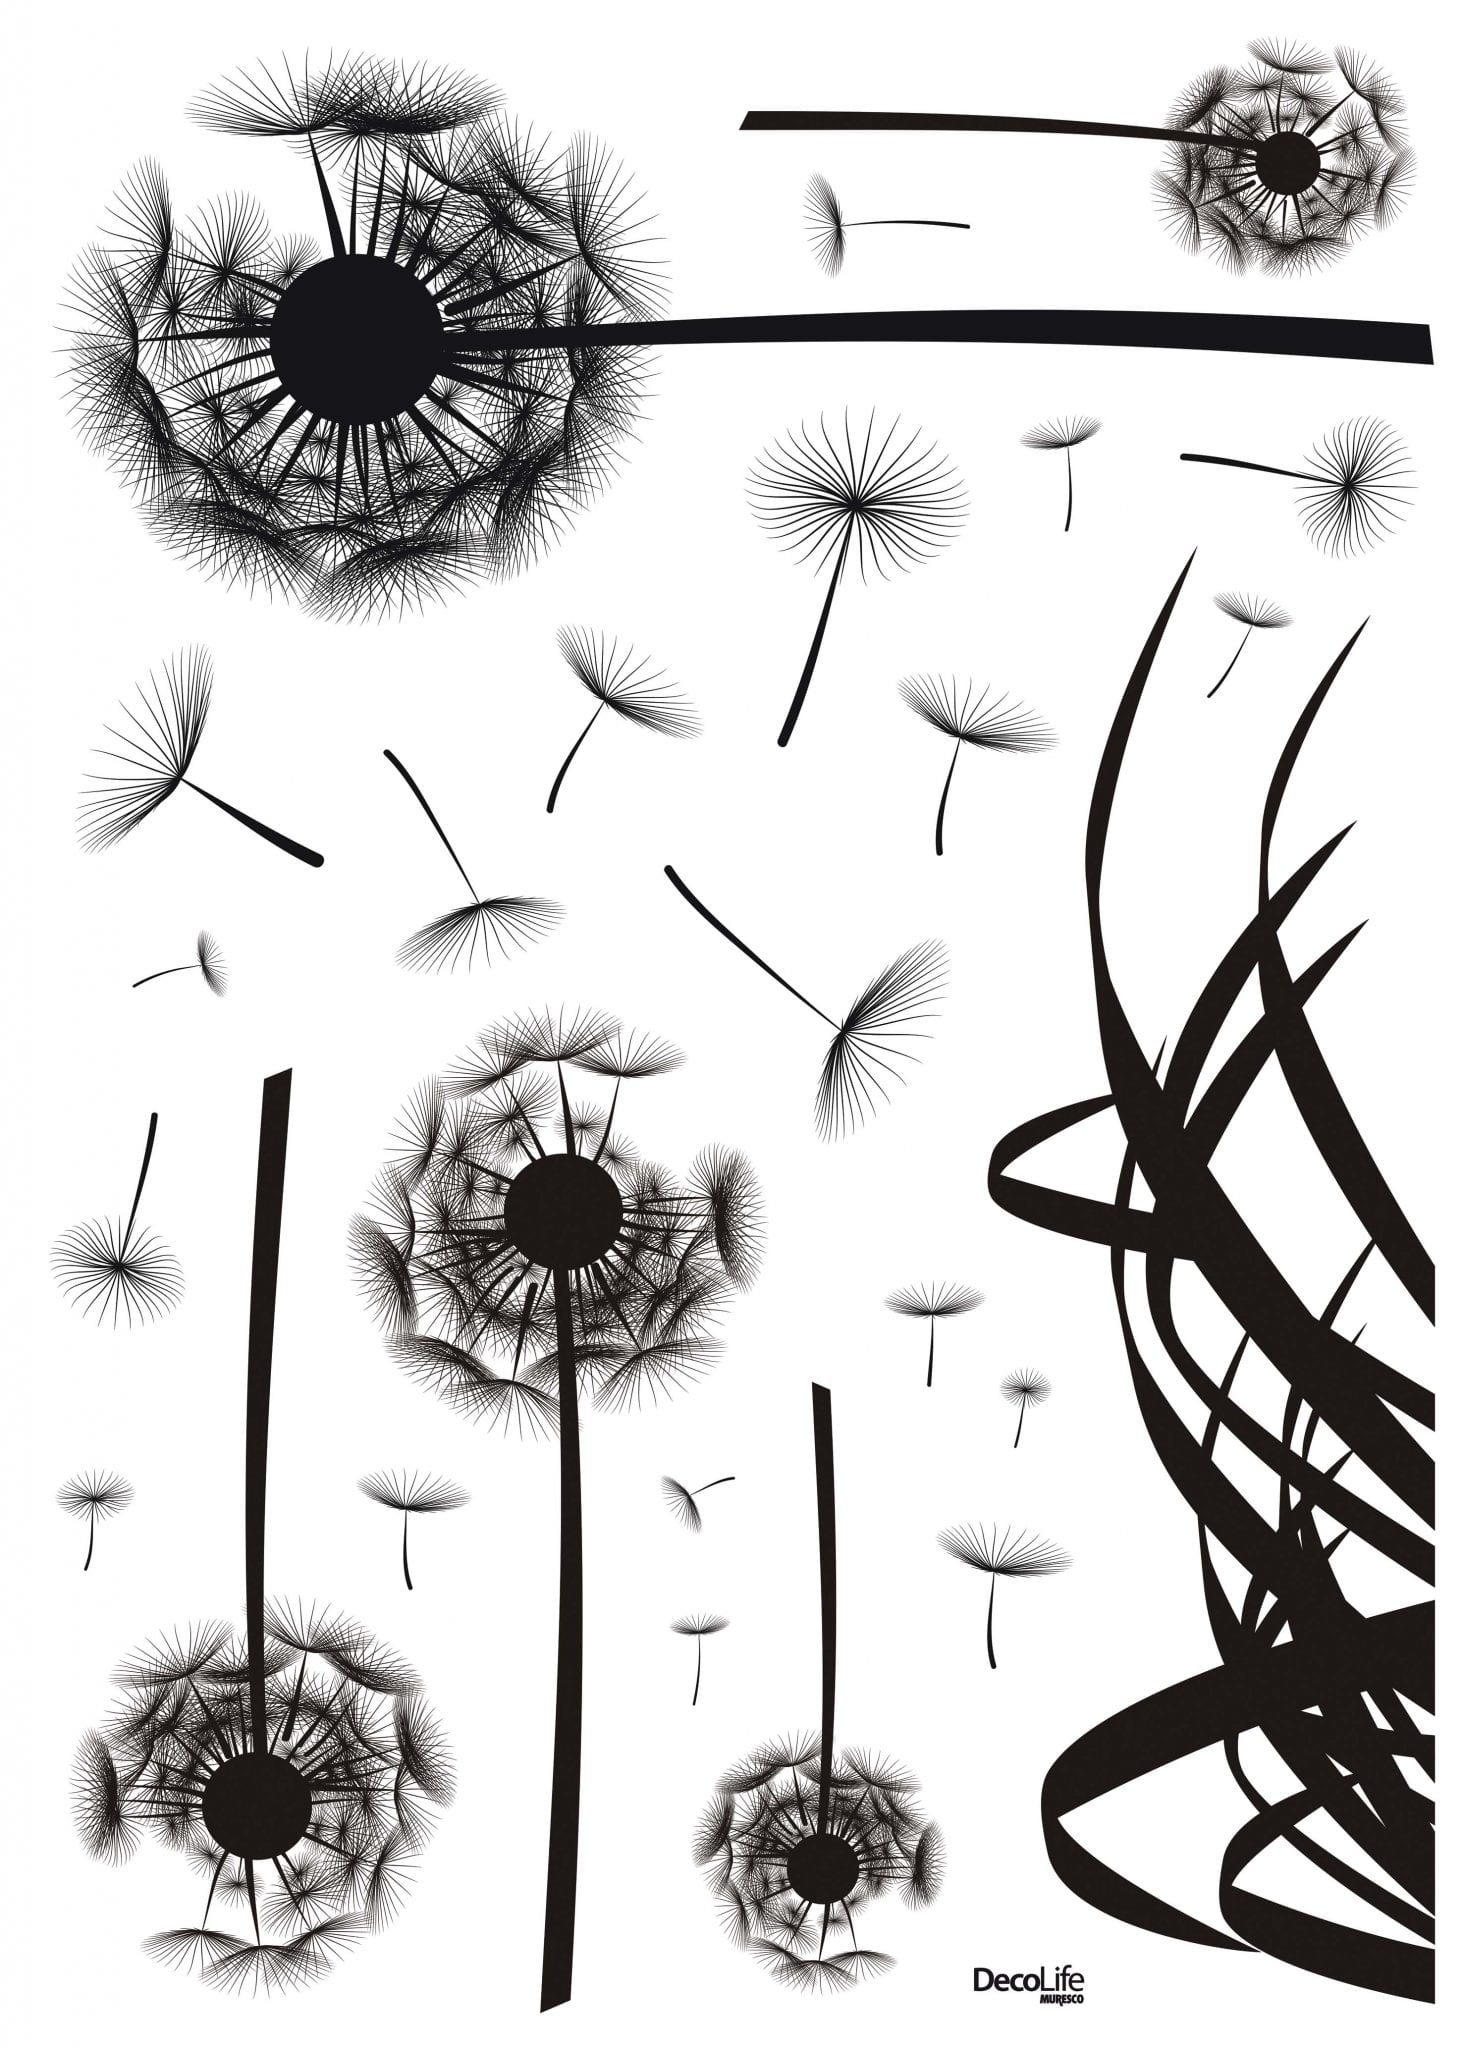 Wallsticker Flores negras 1573-1 / 50 x 70 cm • Cinthiasa